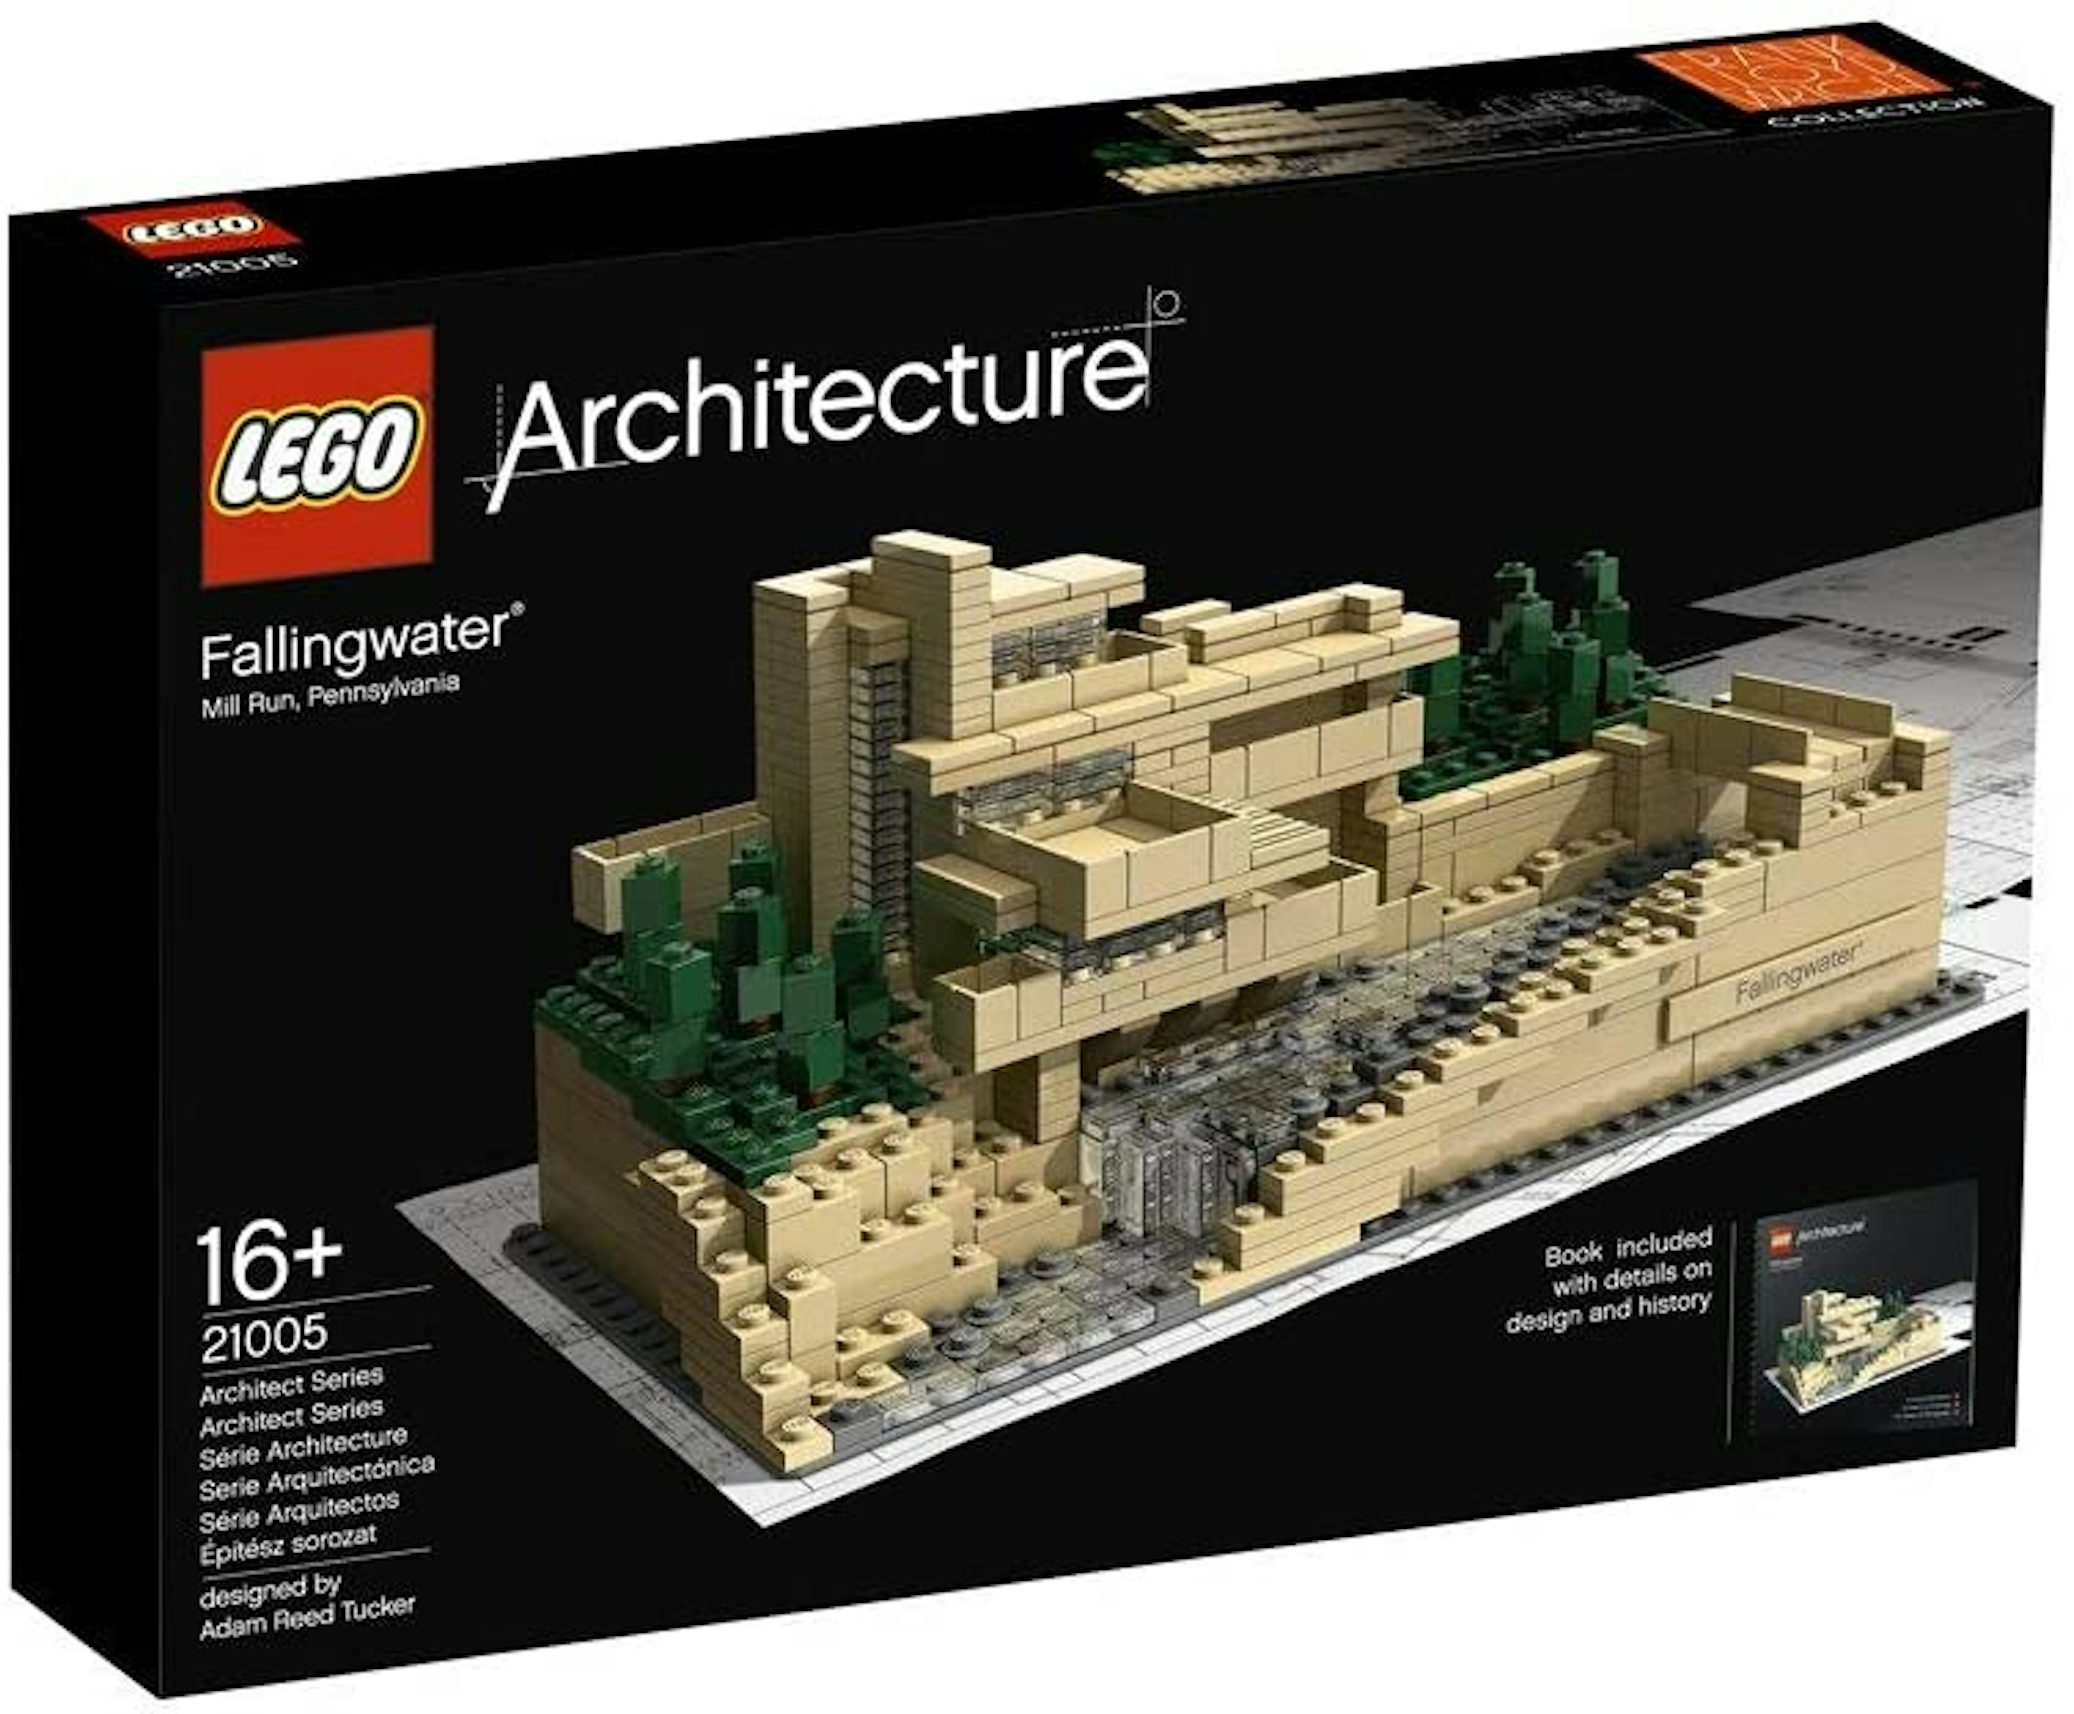 https://images.stockx.com/images/LEGO-Architecture-Fallingwater-Set-21005.jpg?fit=fill&bg=FFFFFF&w=1200&h=857&fm=jpg&auto=compress&dpr=2&trim=color&updated_at=1613490598&q=60